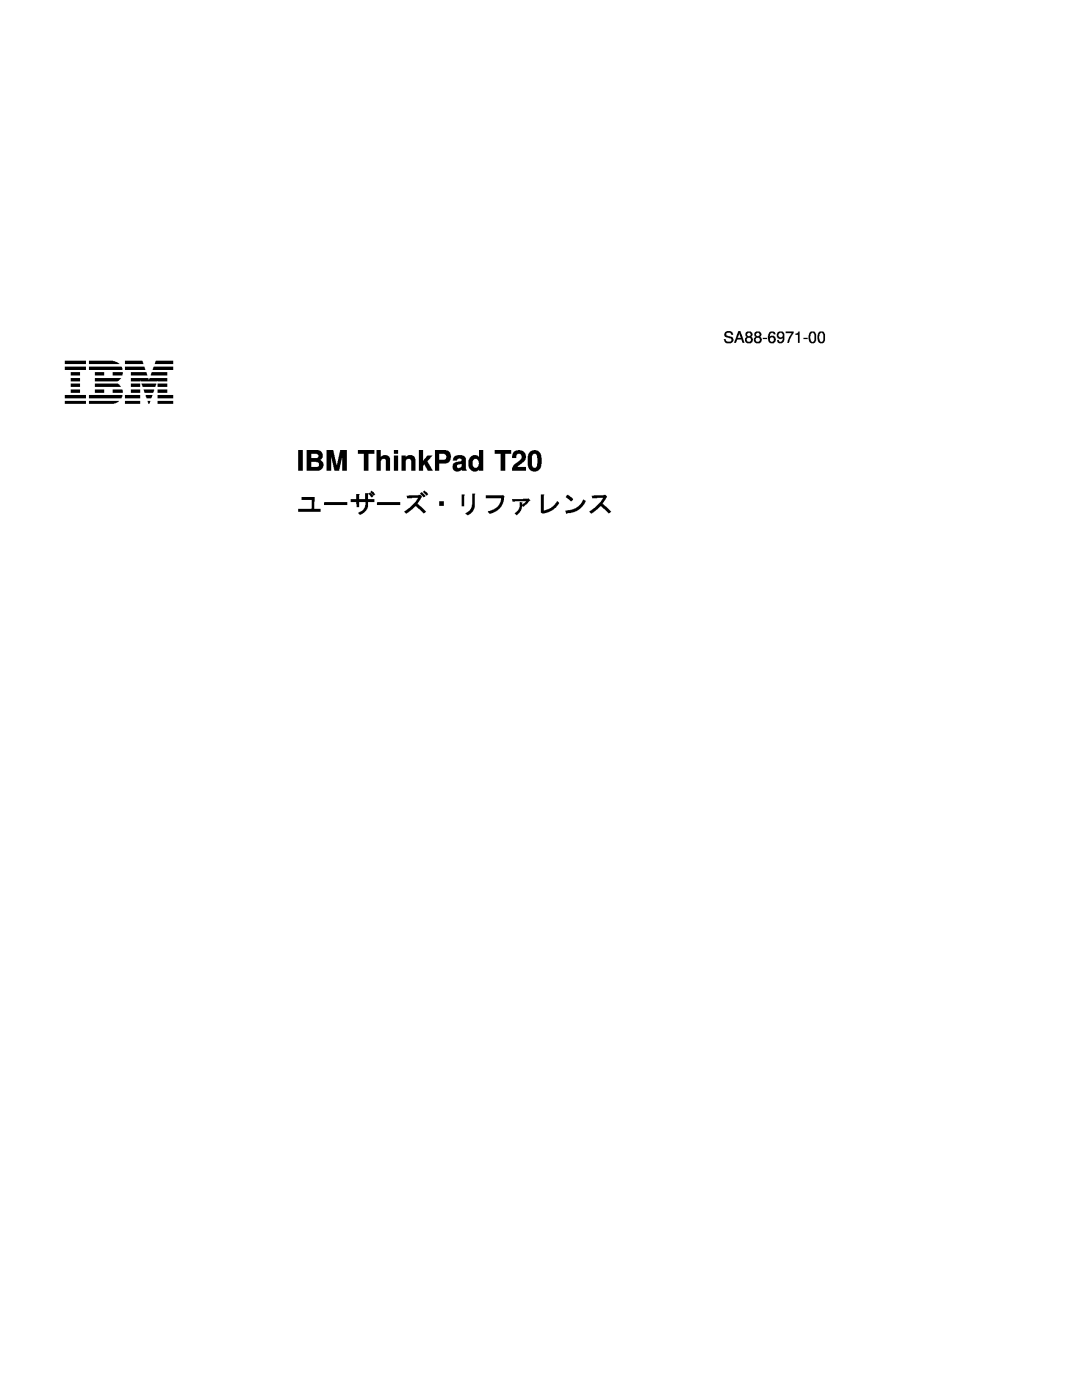 IBM manual IBM ThinkPad T20, ユーザーズ・リファレンス 